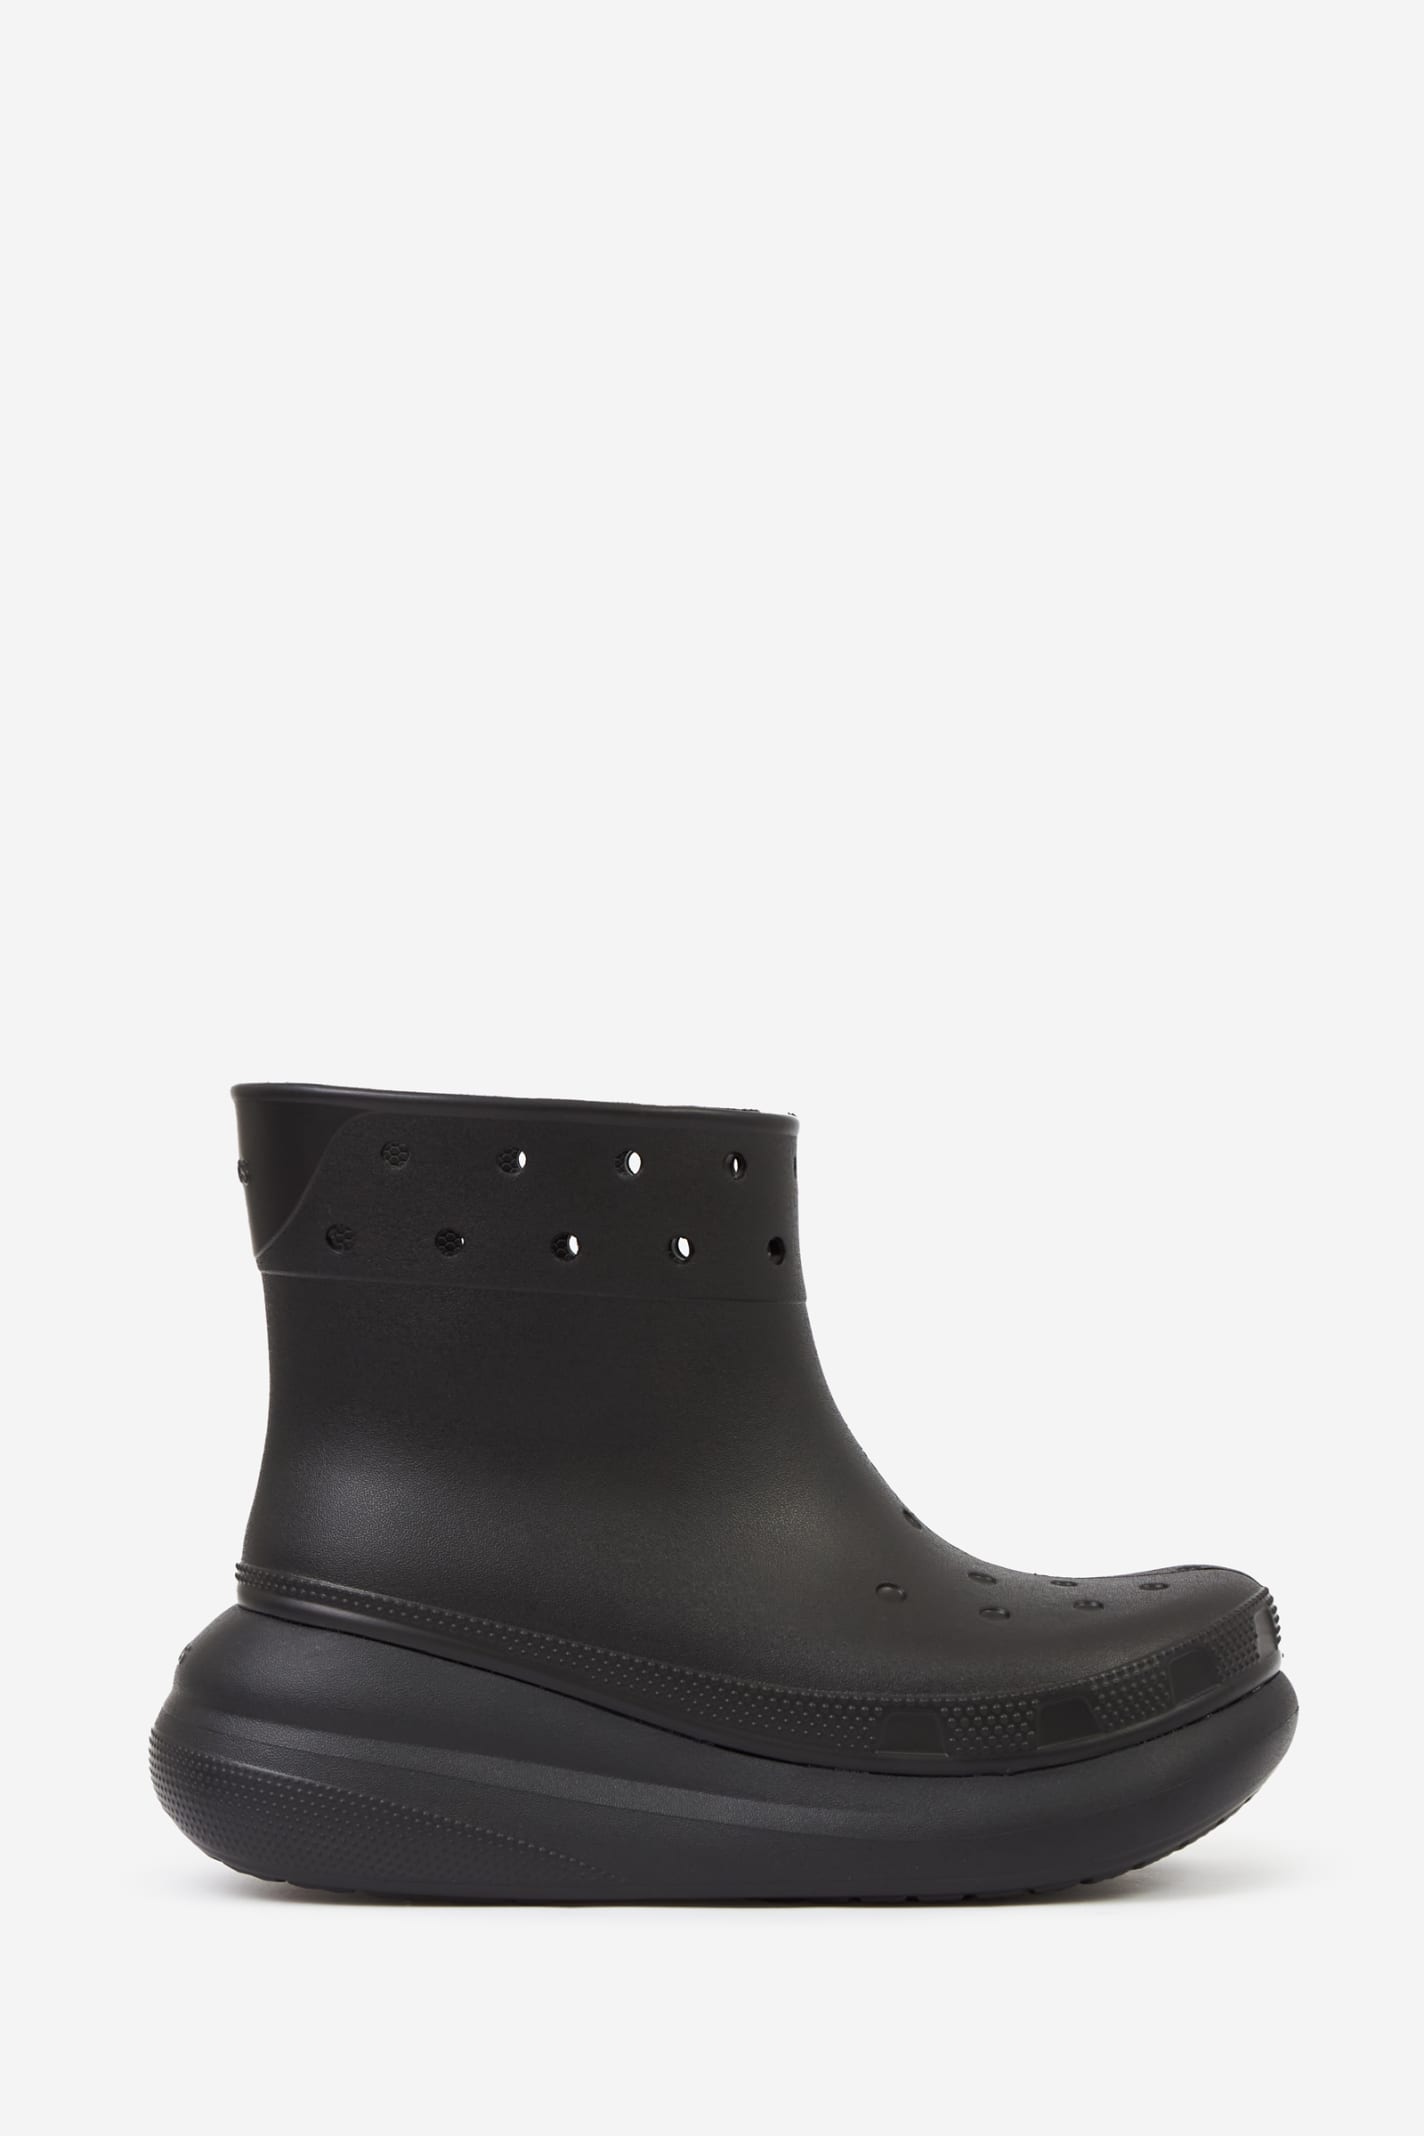 Crocs Crush Rain Boot Boots In Black